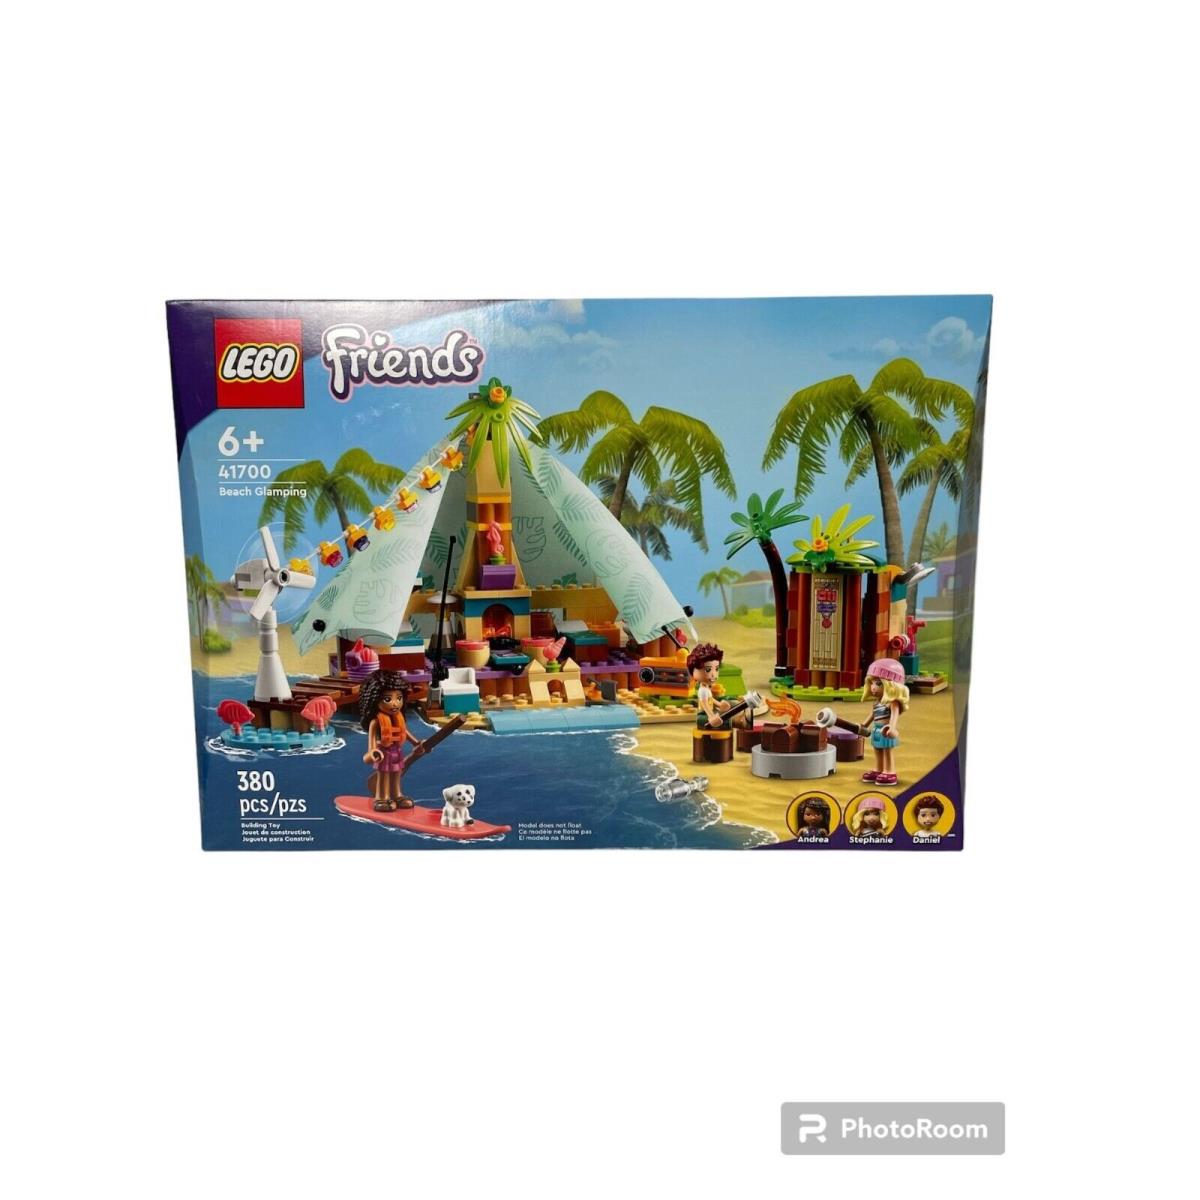 Lego Friends 41700 Beach Glamping 380 Pcs